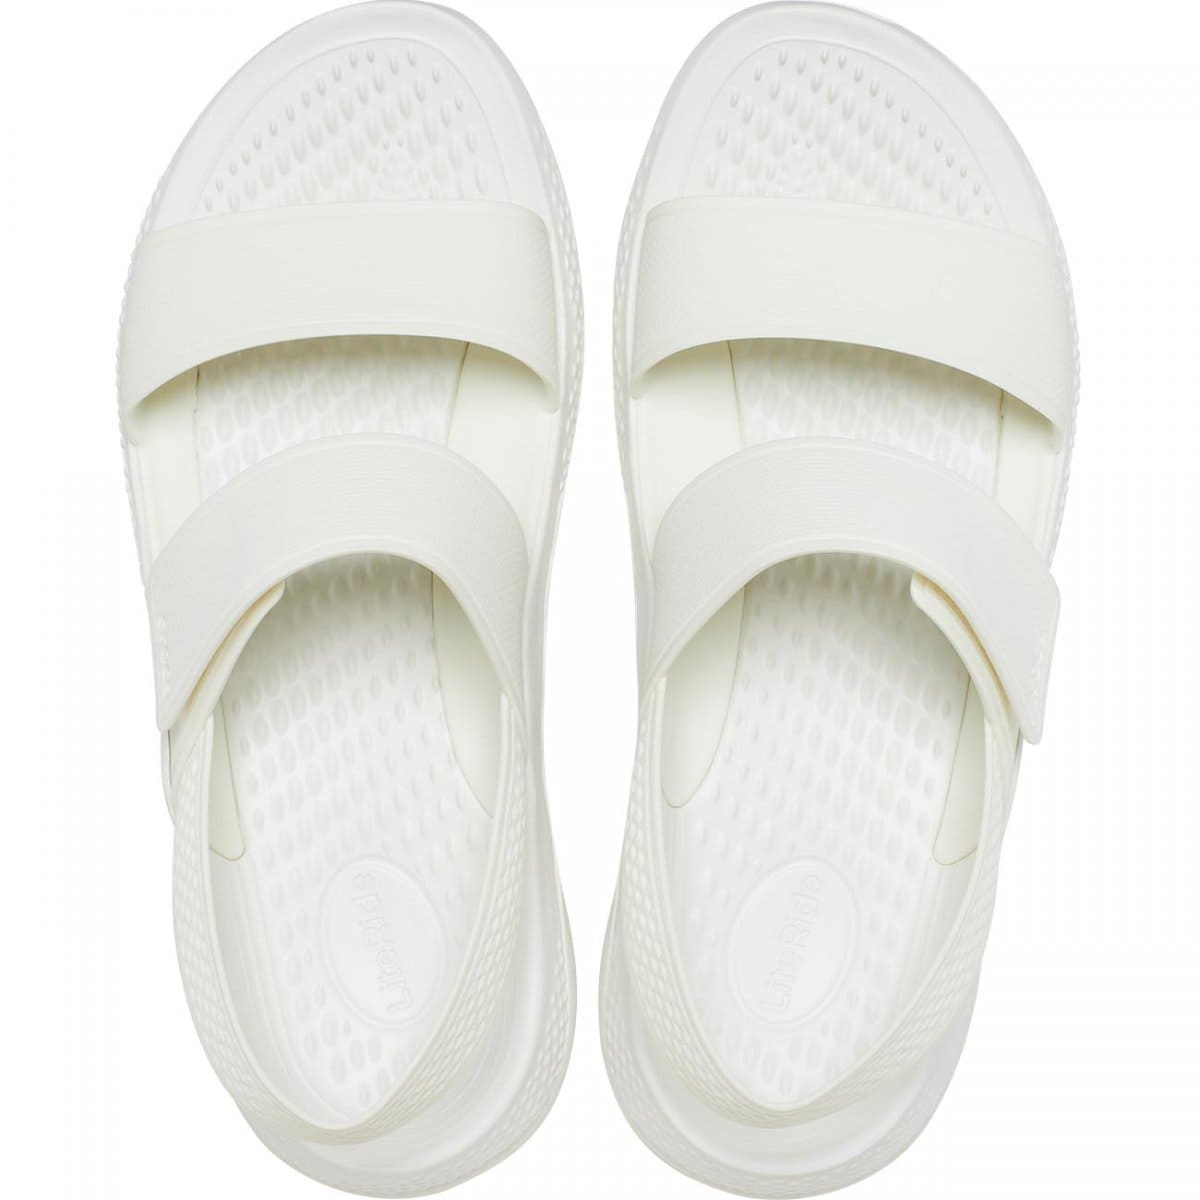 Las sandalias de mujer LiteRide 360 W de Crocs